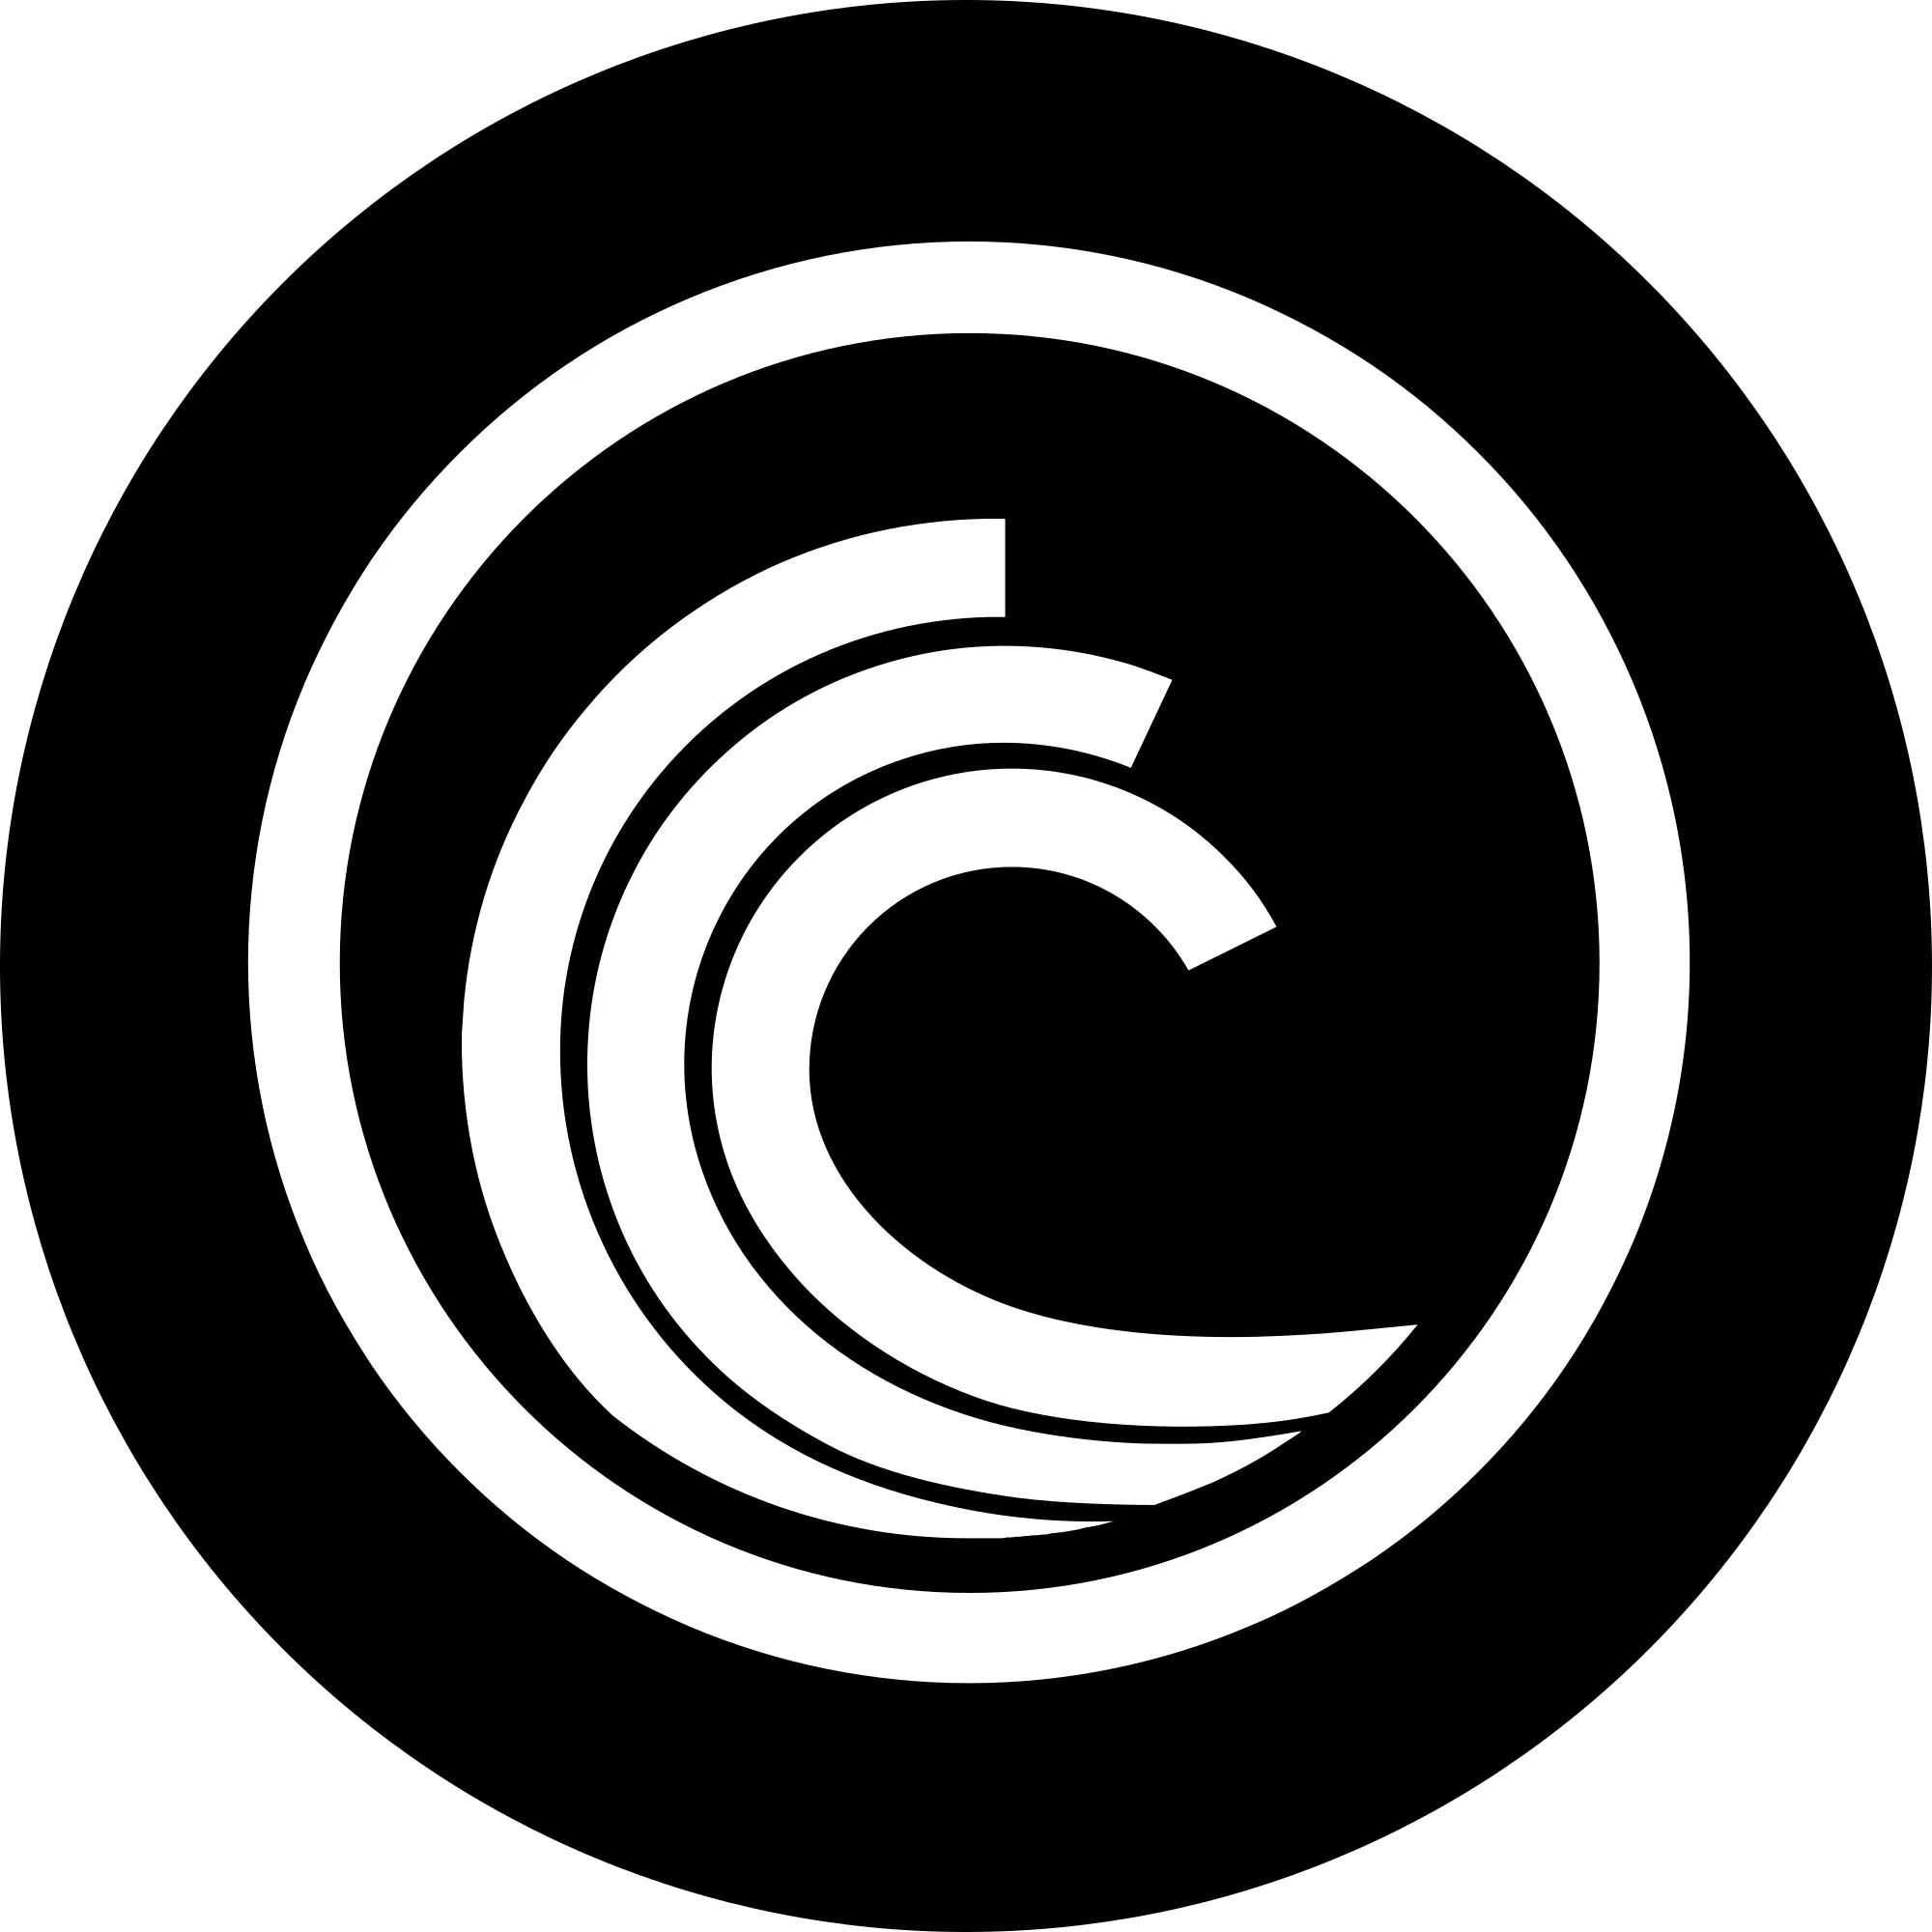 BitTorrent logo in png format